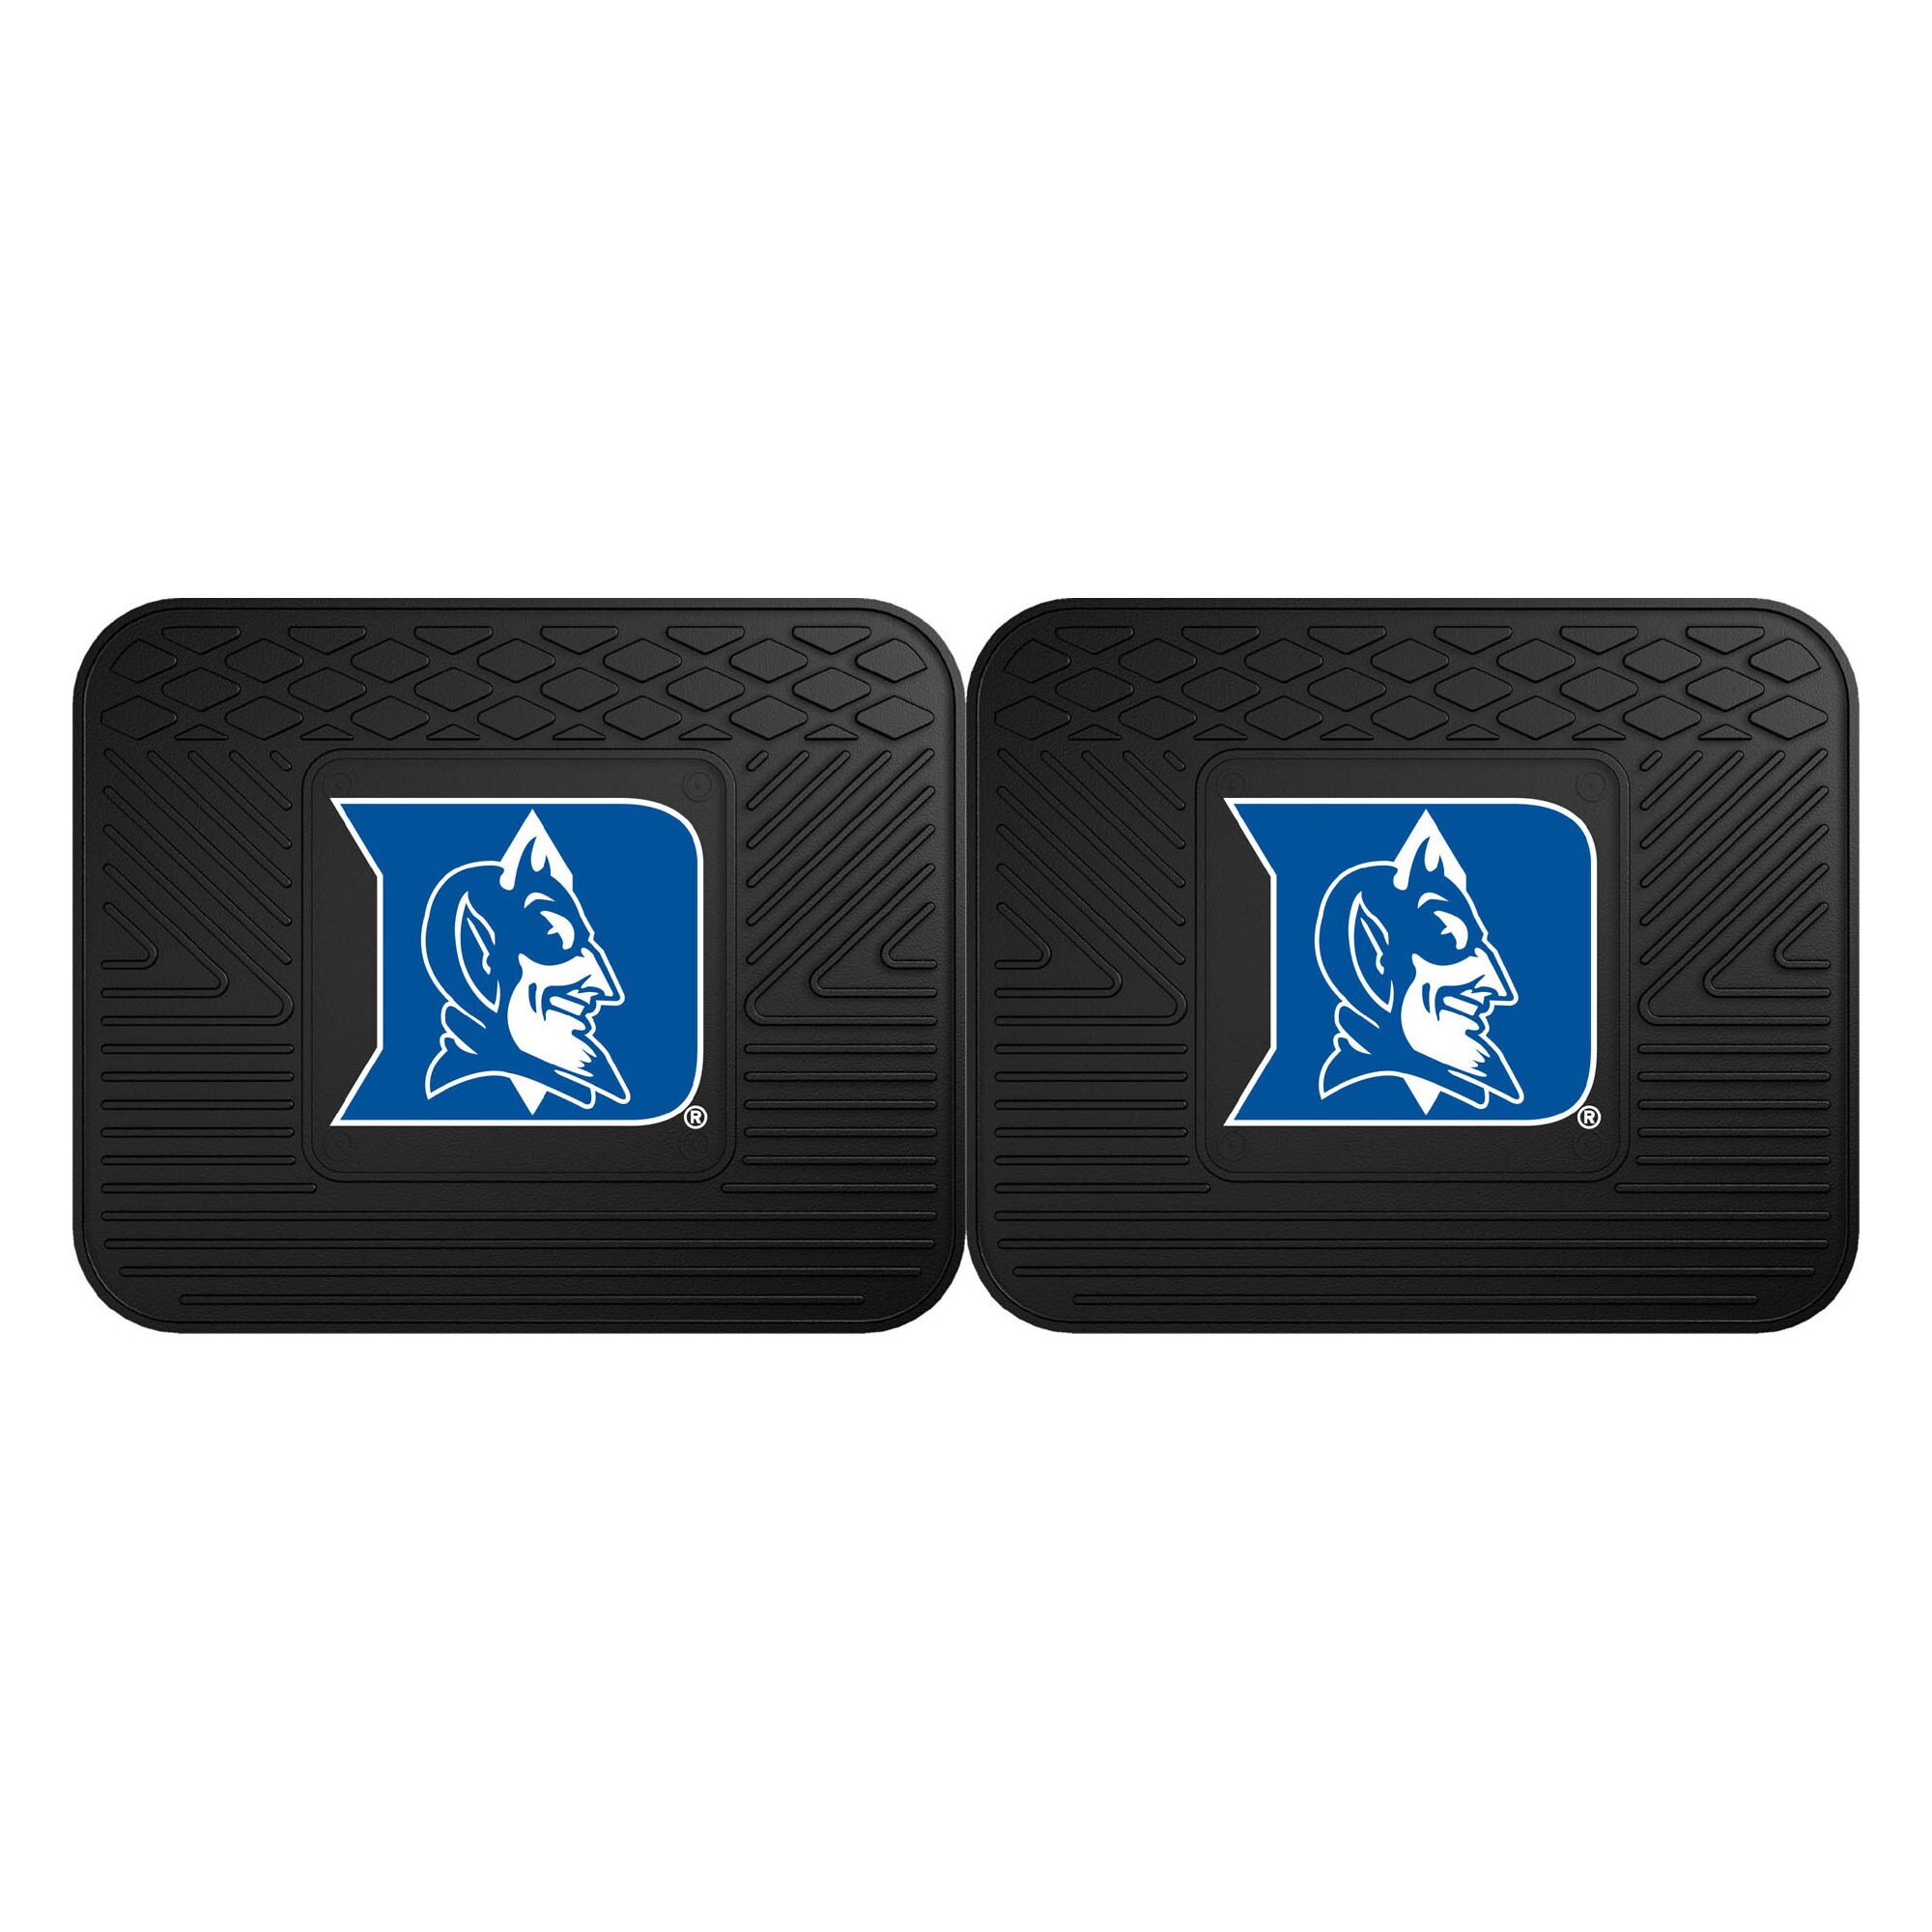 FANMATS NCAA Duke University Blue Devils Polyester Seat Cover 